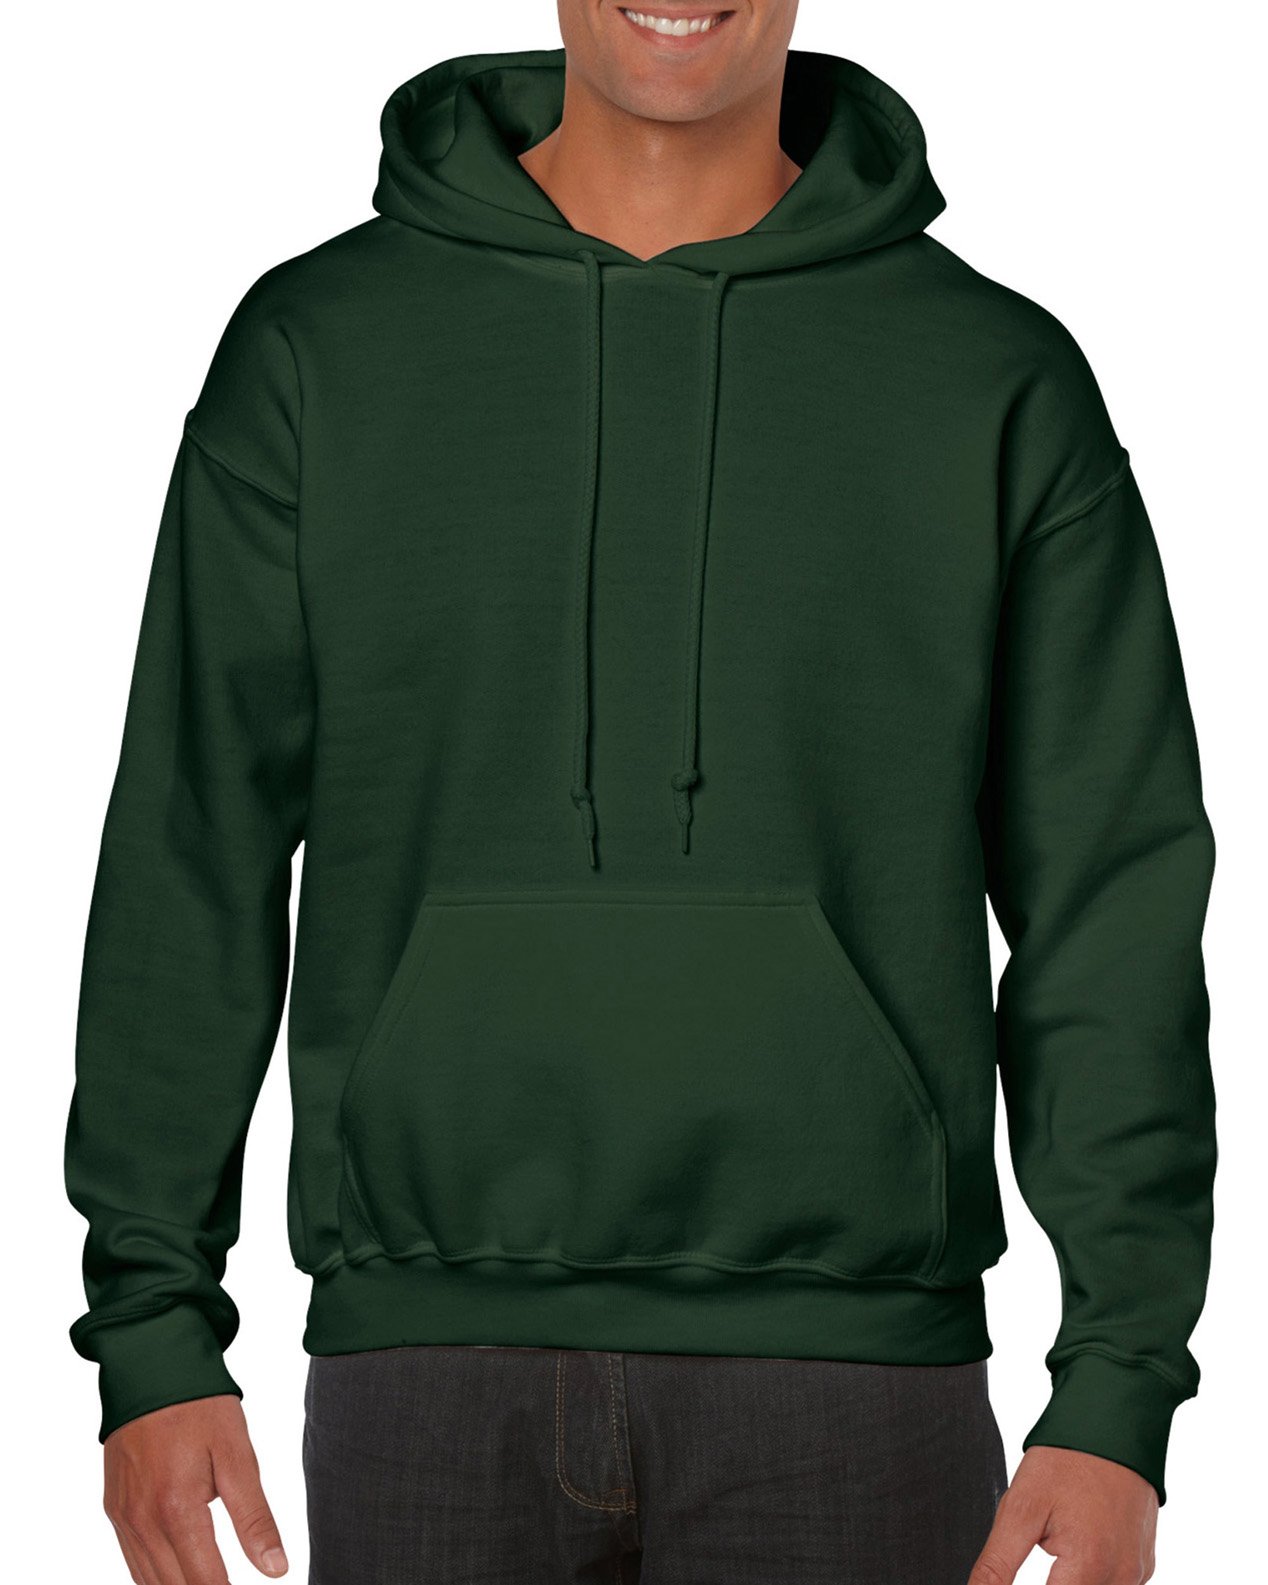 Gildan Adult Fleece Hooded Sweatshirt, Style G18500, Forest Green, Medium